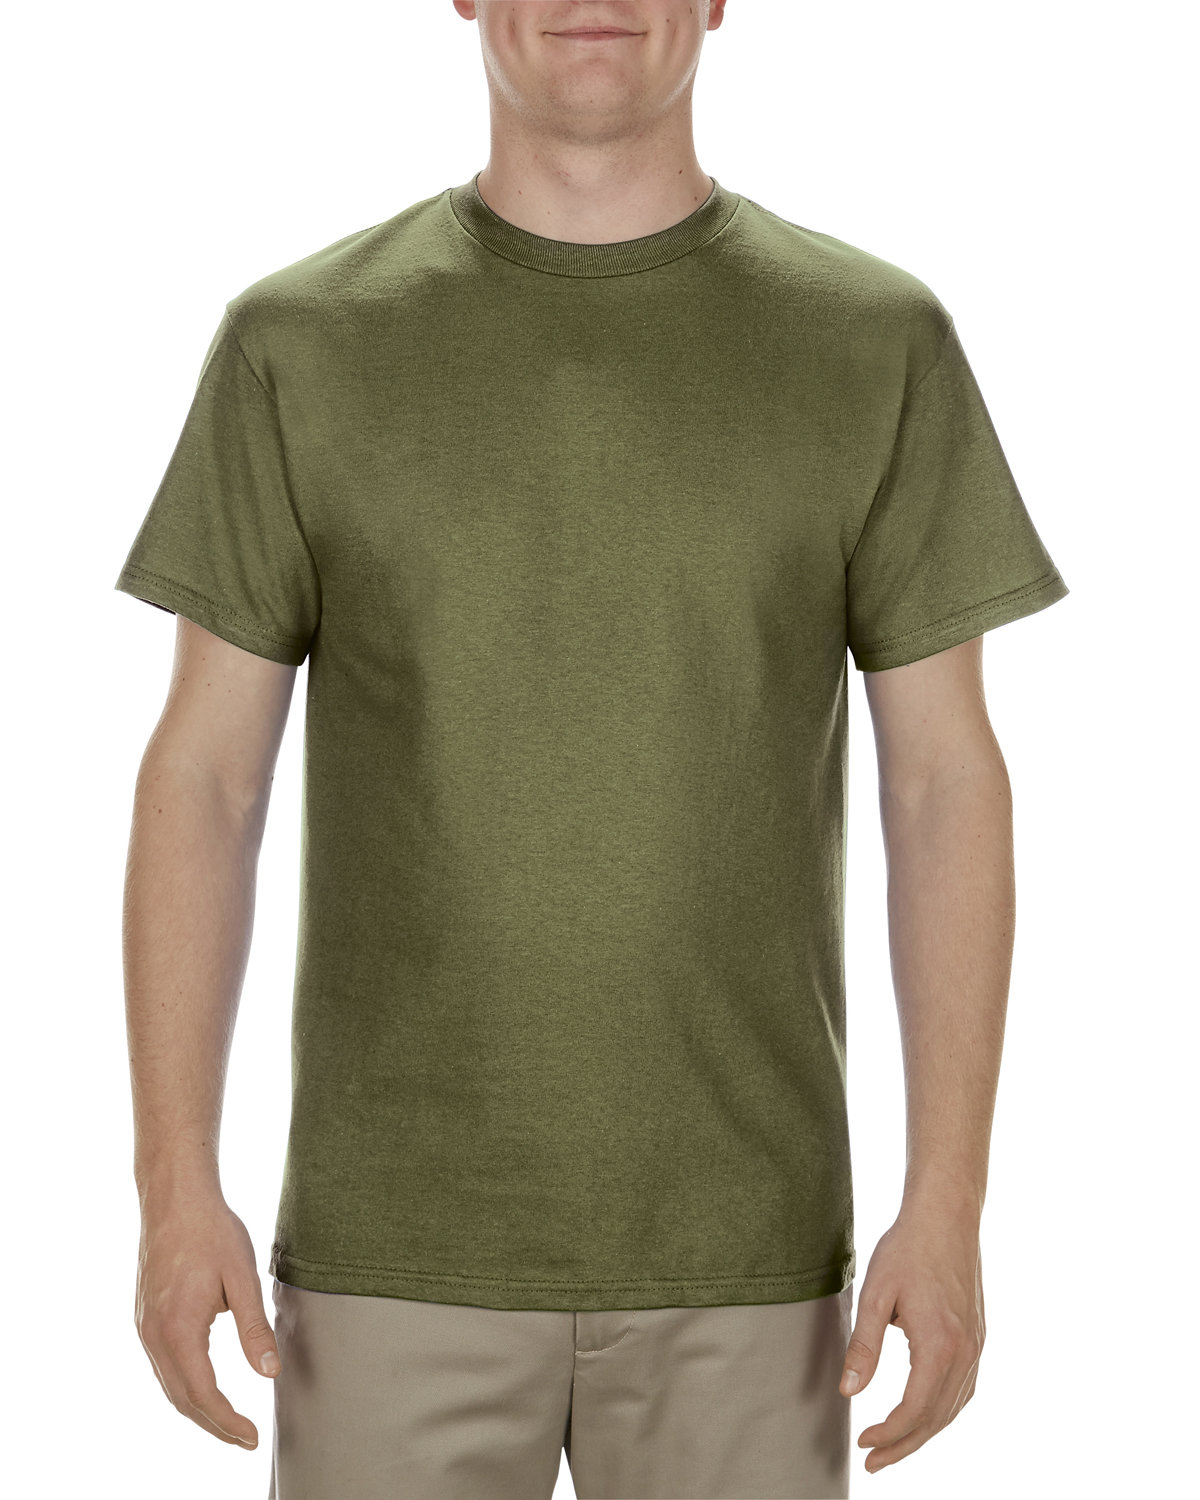 Alstyle Adult 5.1 oz., 100% Soft Spun Cotton T-Shirt MILITARY GREEN 